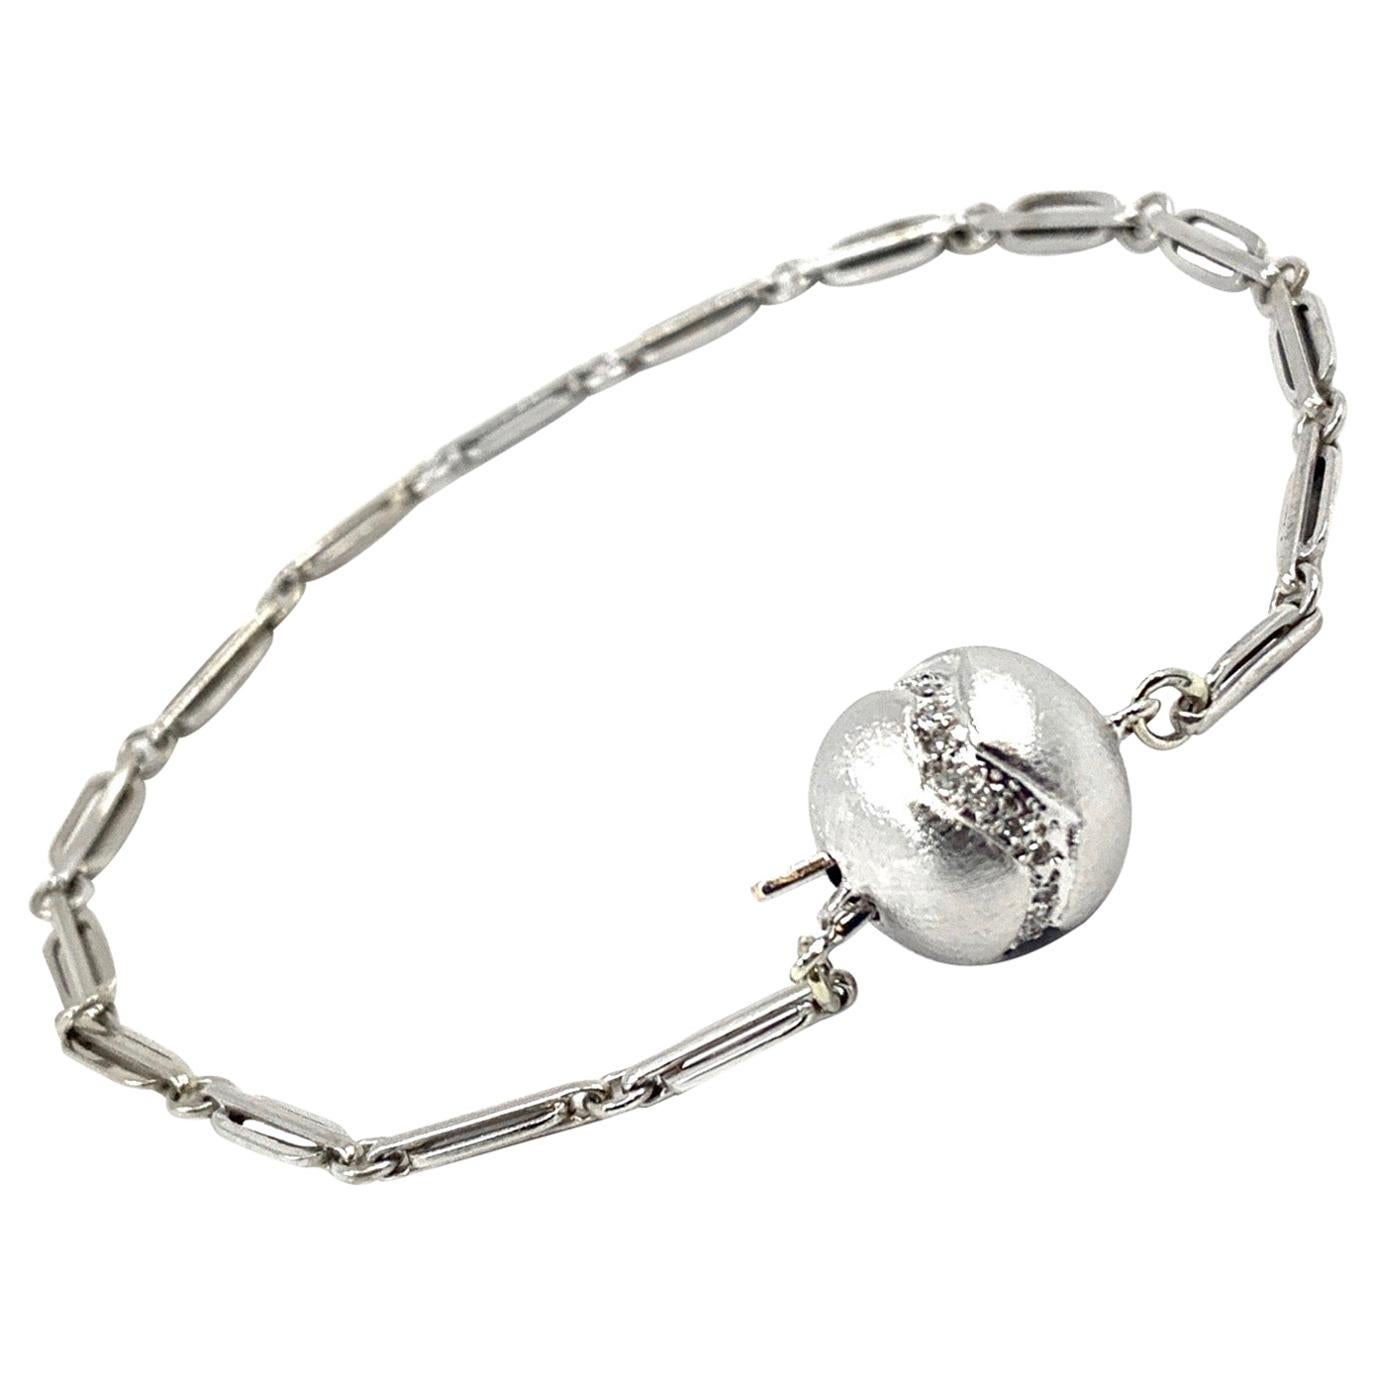 White Gold Bracelet with Retro-Era Watch Chain Links and Diamond Ball Clasp